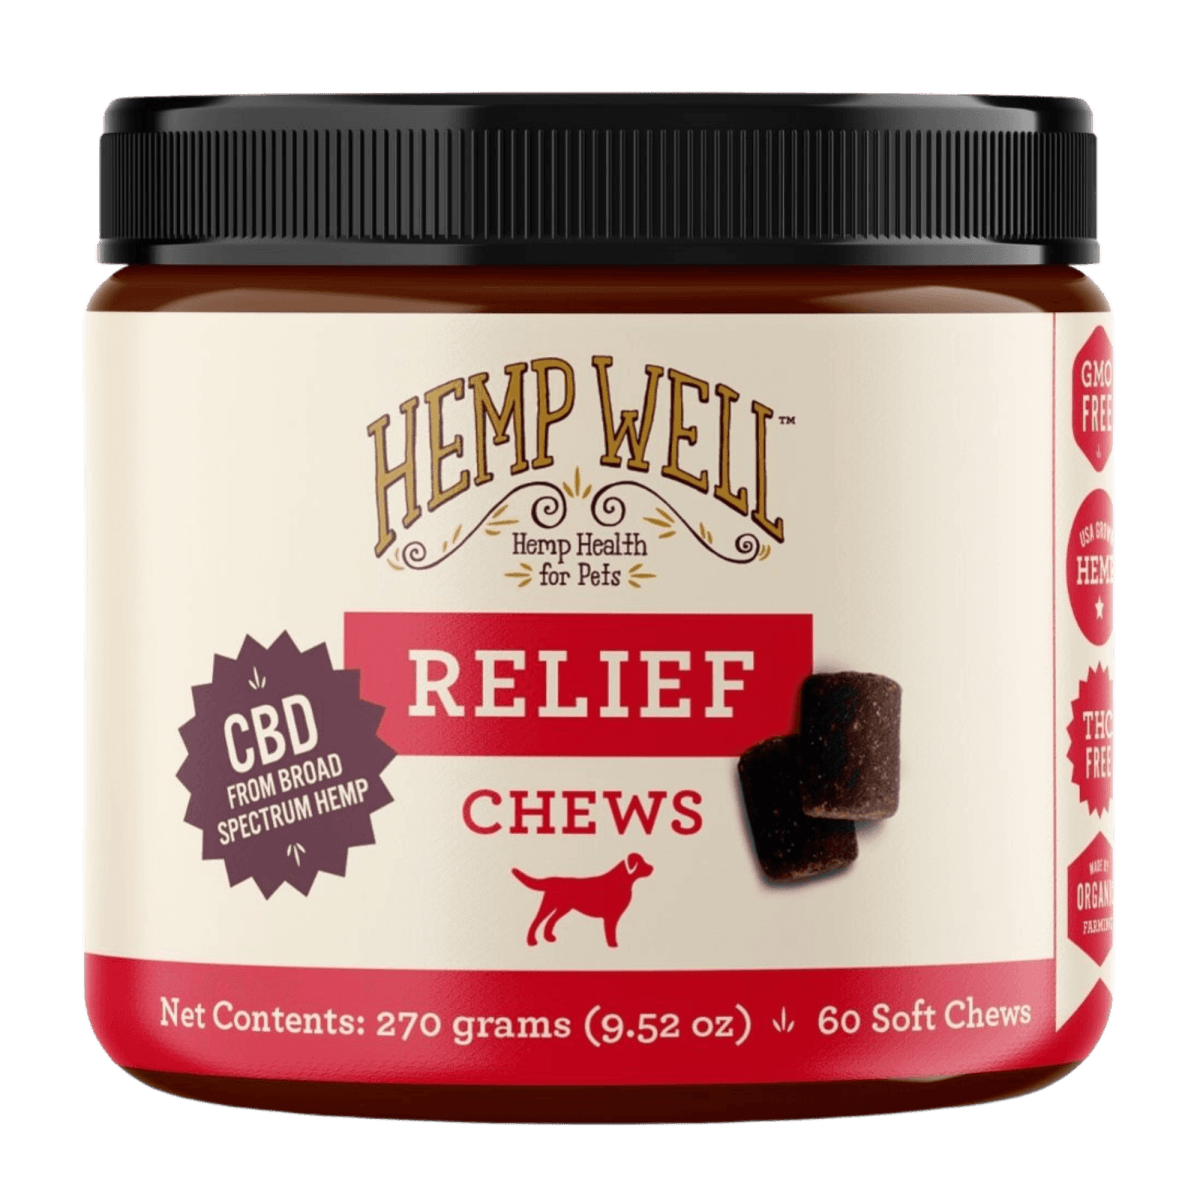 Relief (CBD) Dog Soft Chews - Hemp Well